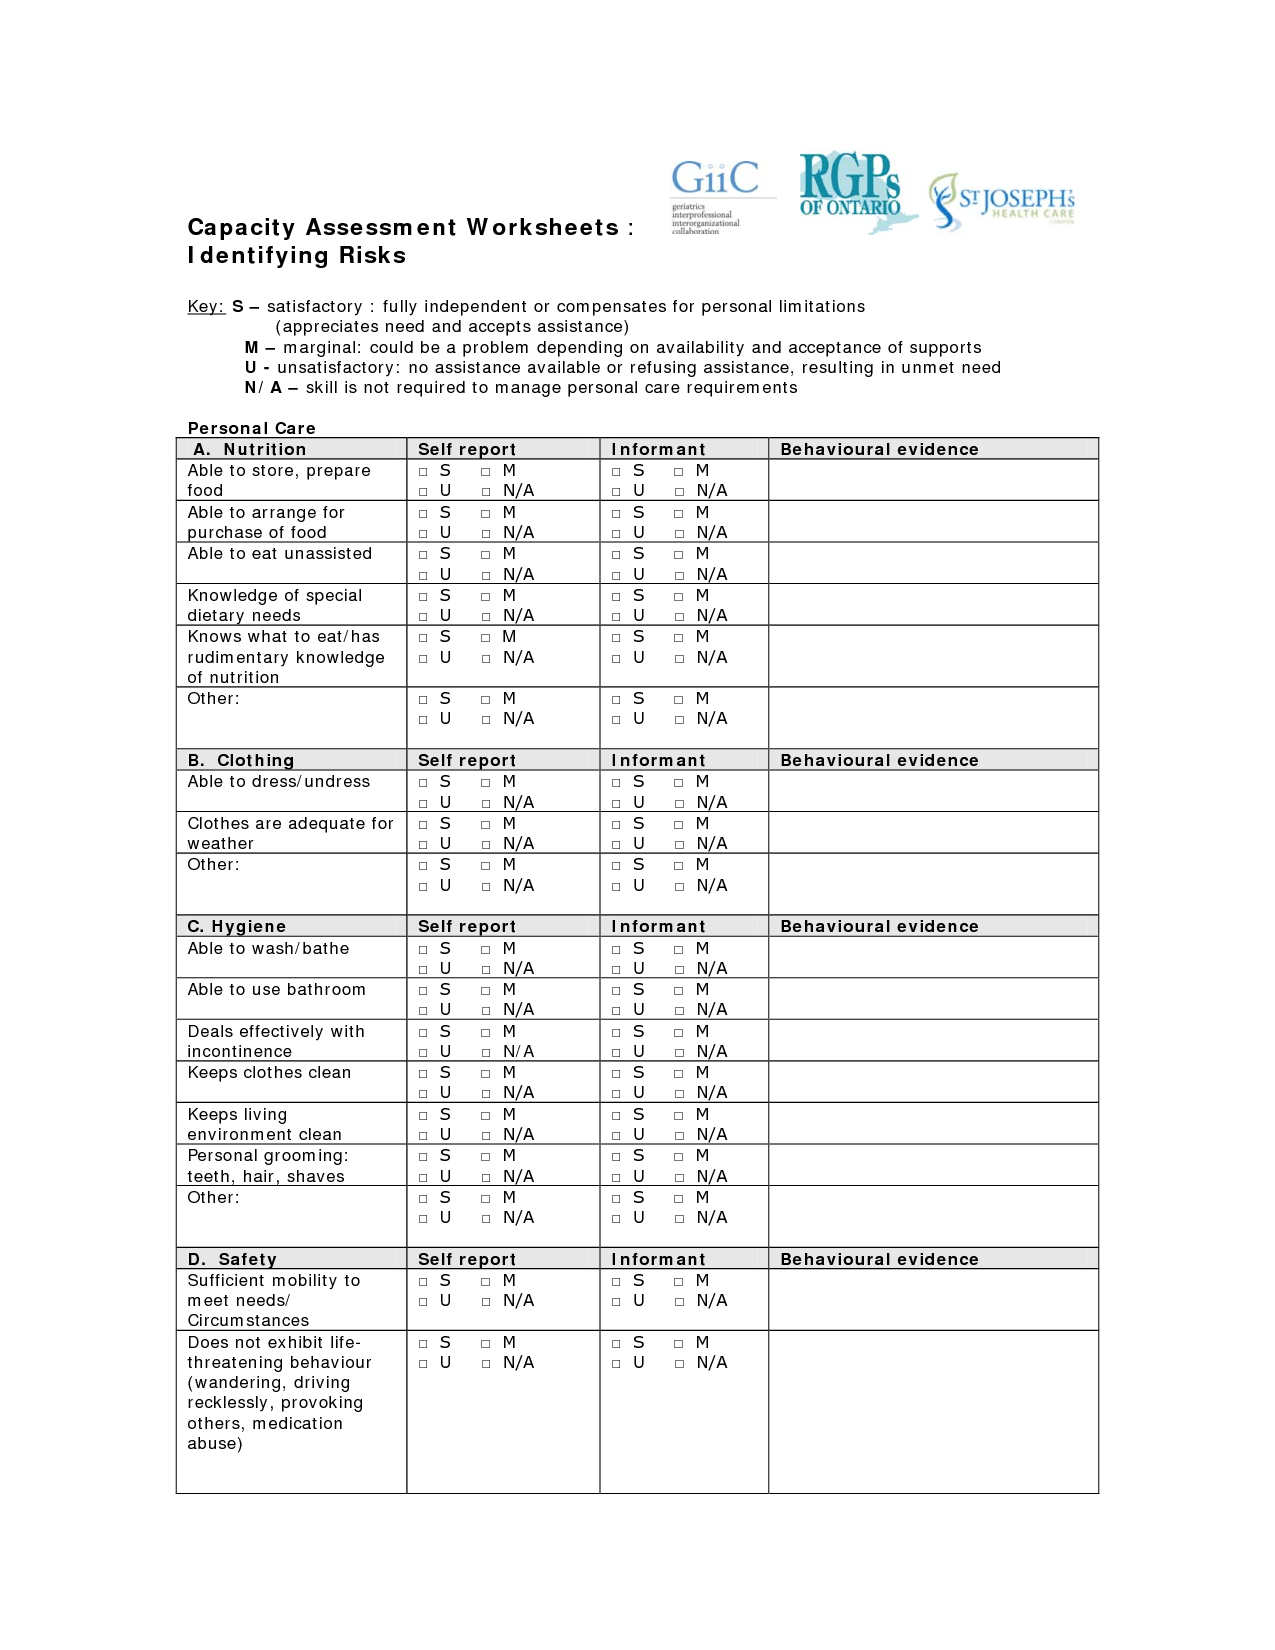 17-best-images-of-teaching-daily-living-skills-worksheets-life-skills-worksheets-for-kids